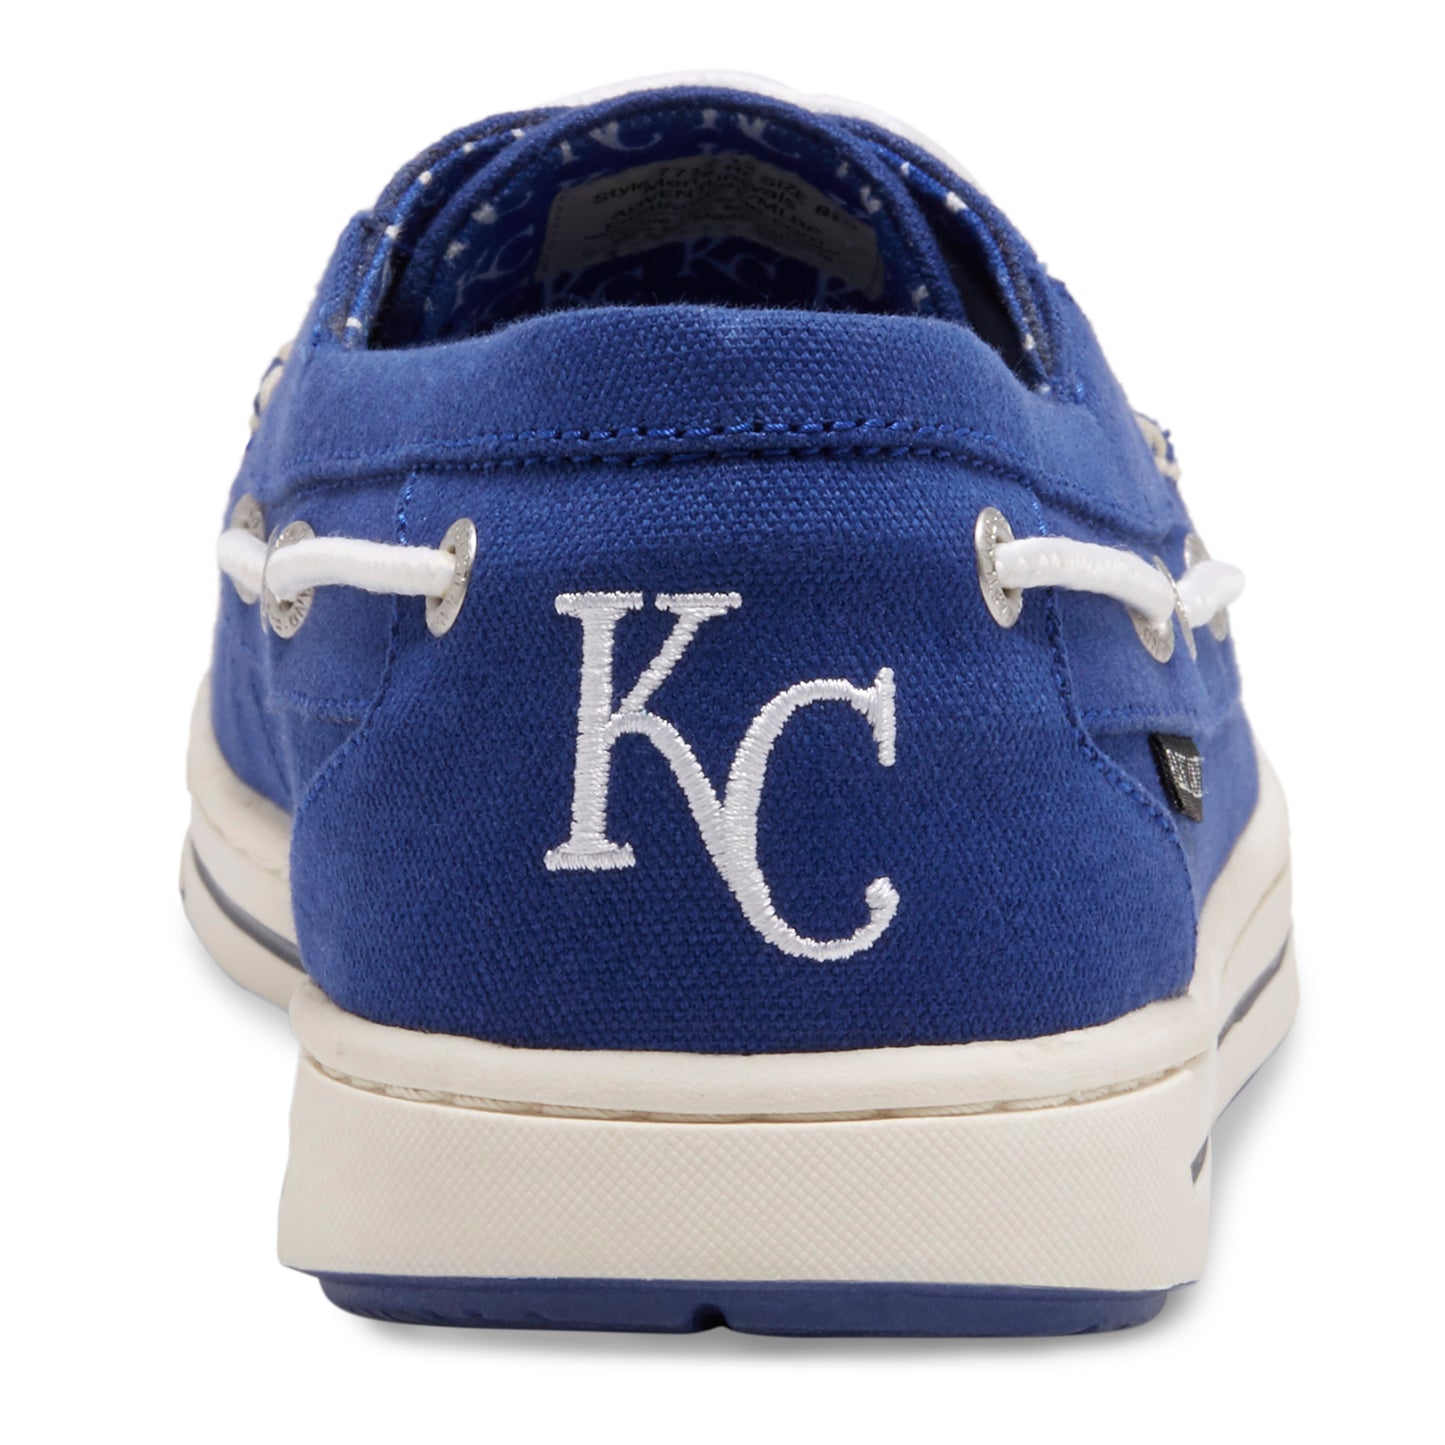 Men's Adventure MLB Kansas City Royals Canvas Boat Shoe